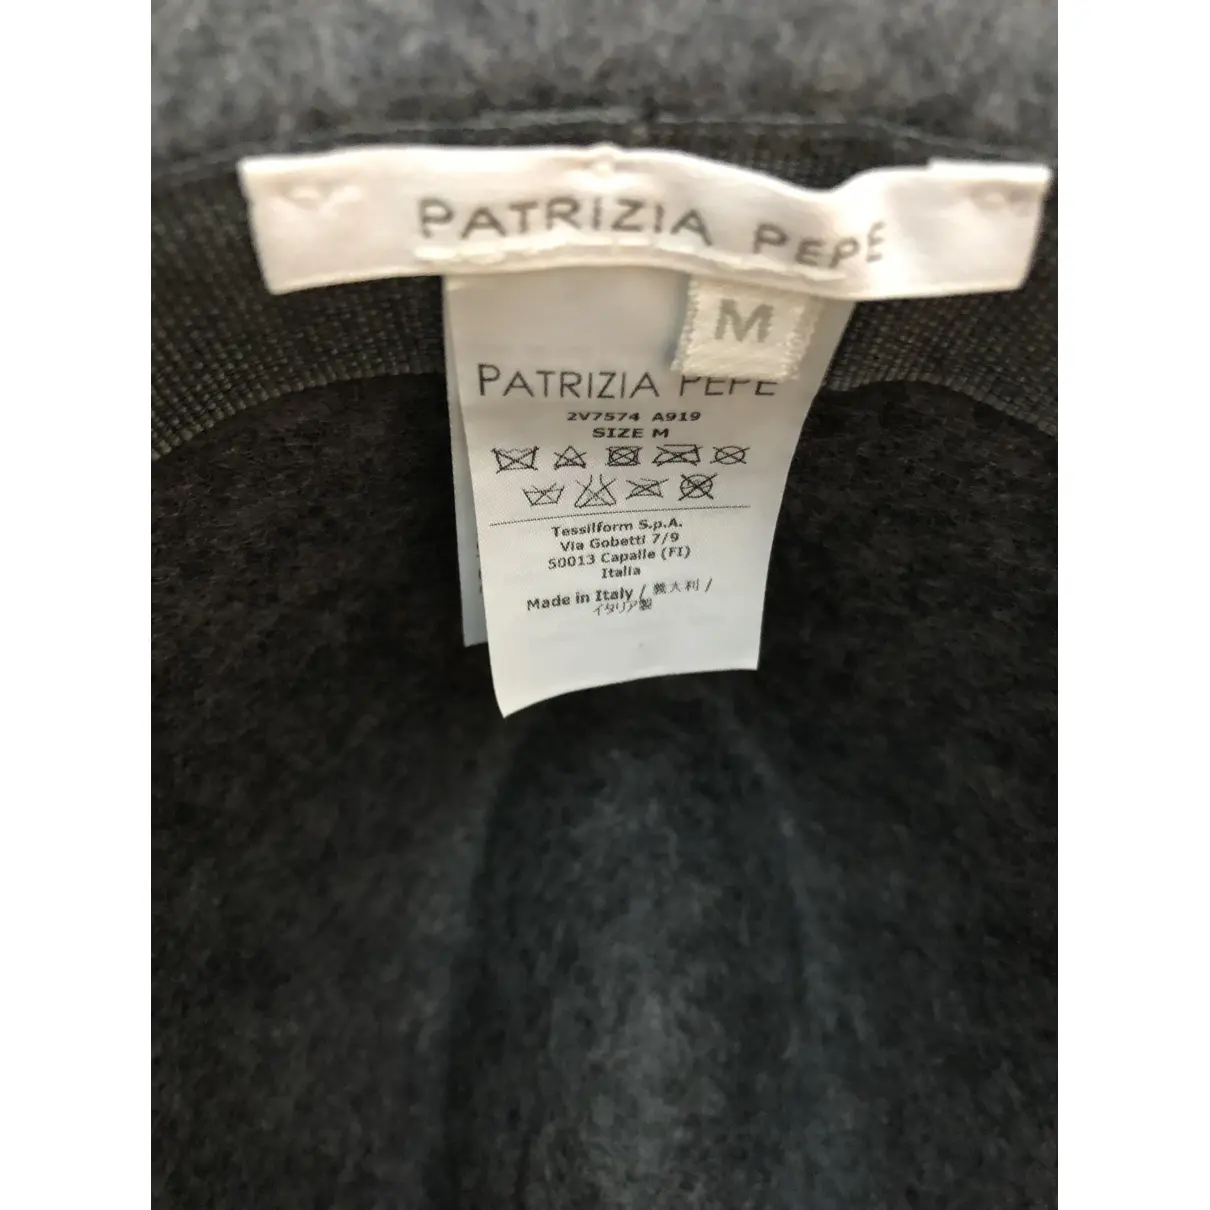 Buy Patrizia Pepe Wool panama online